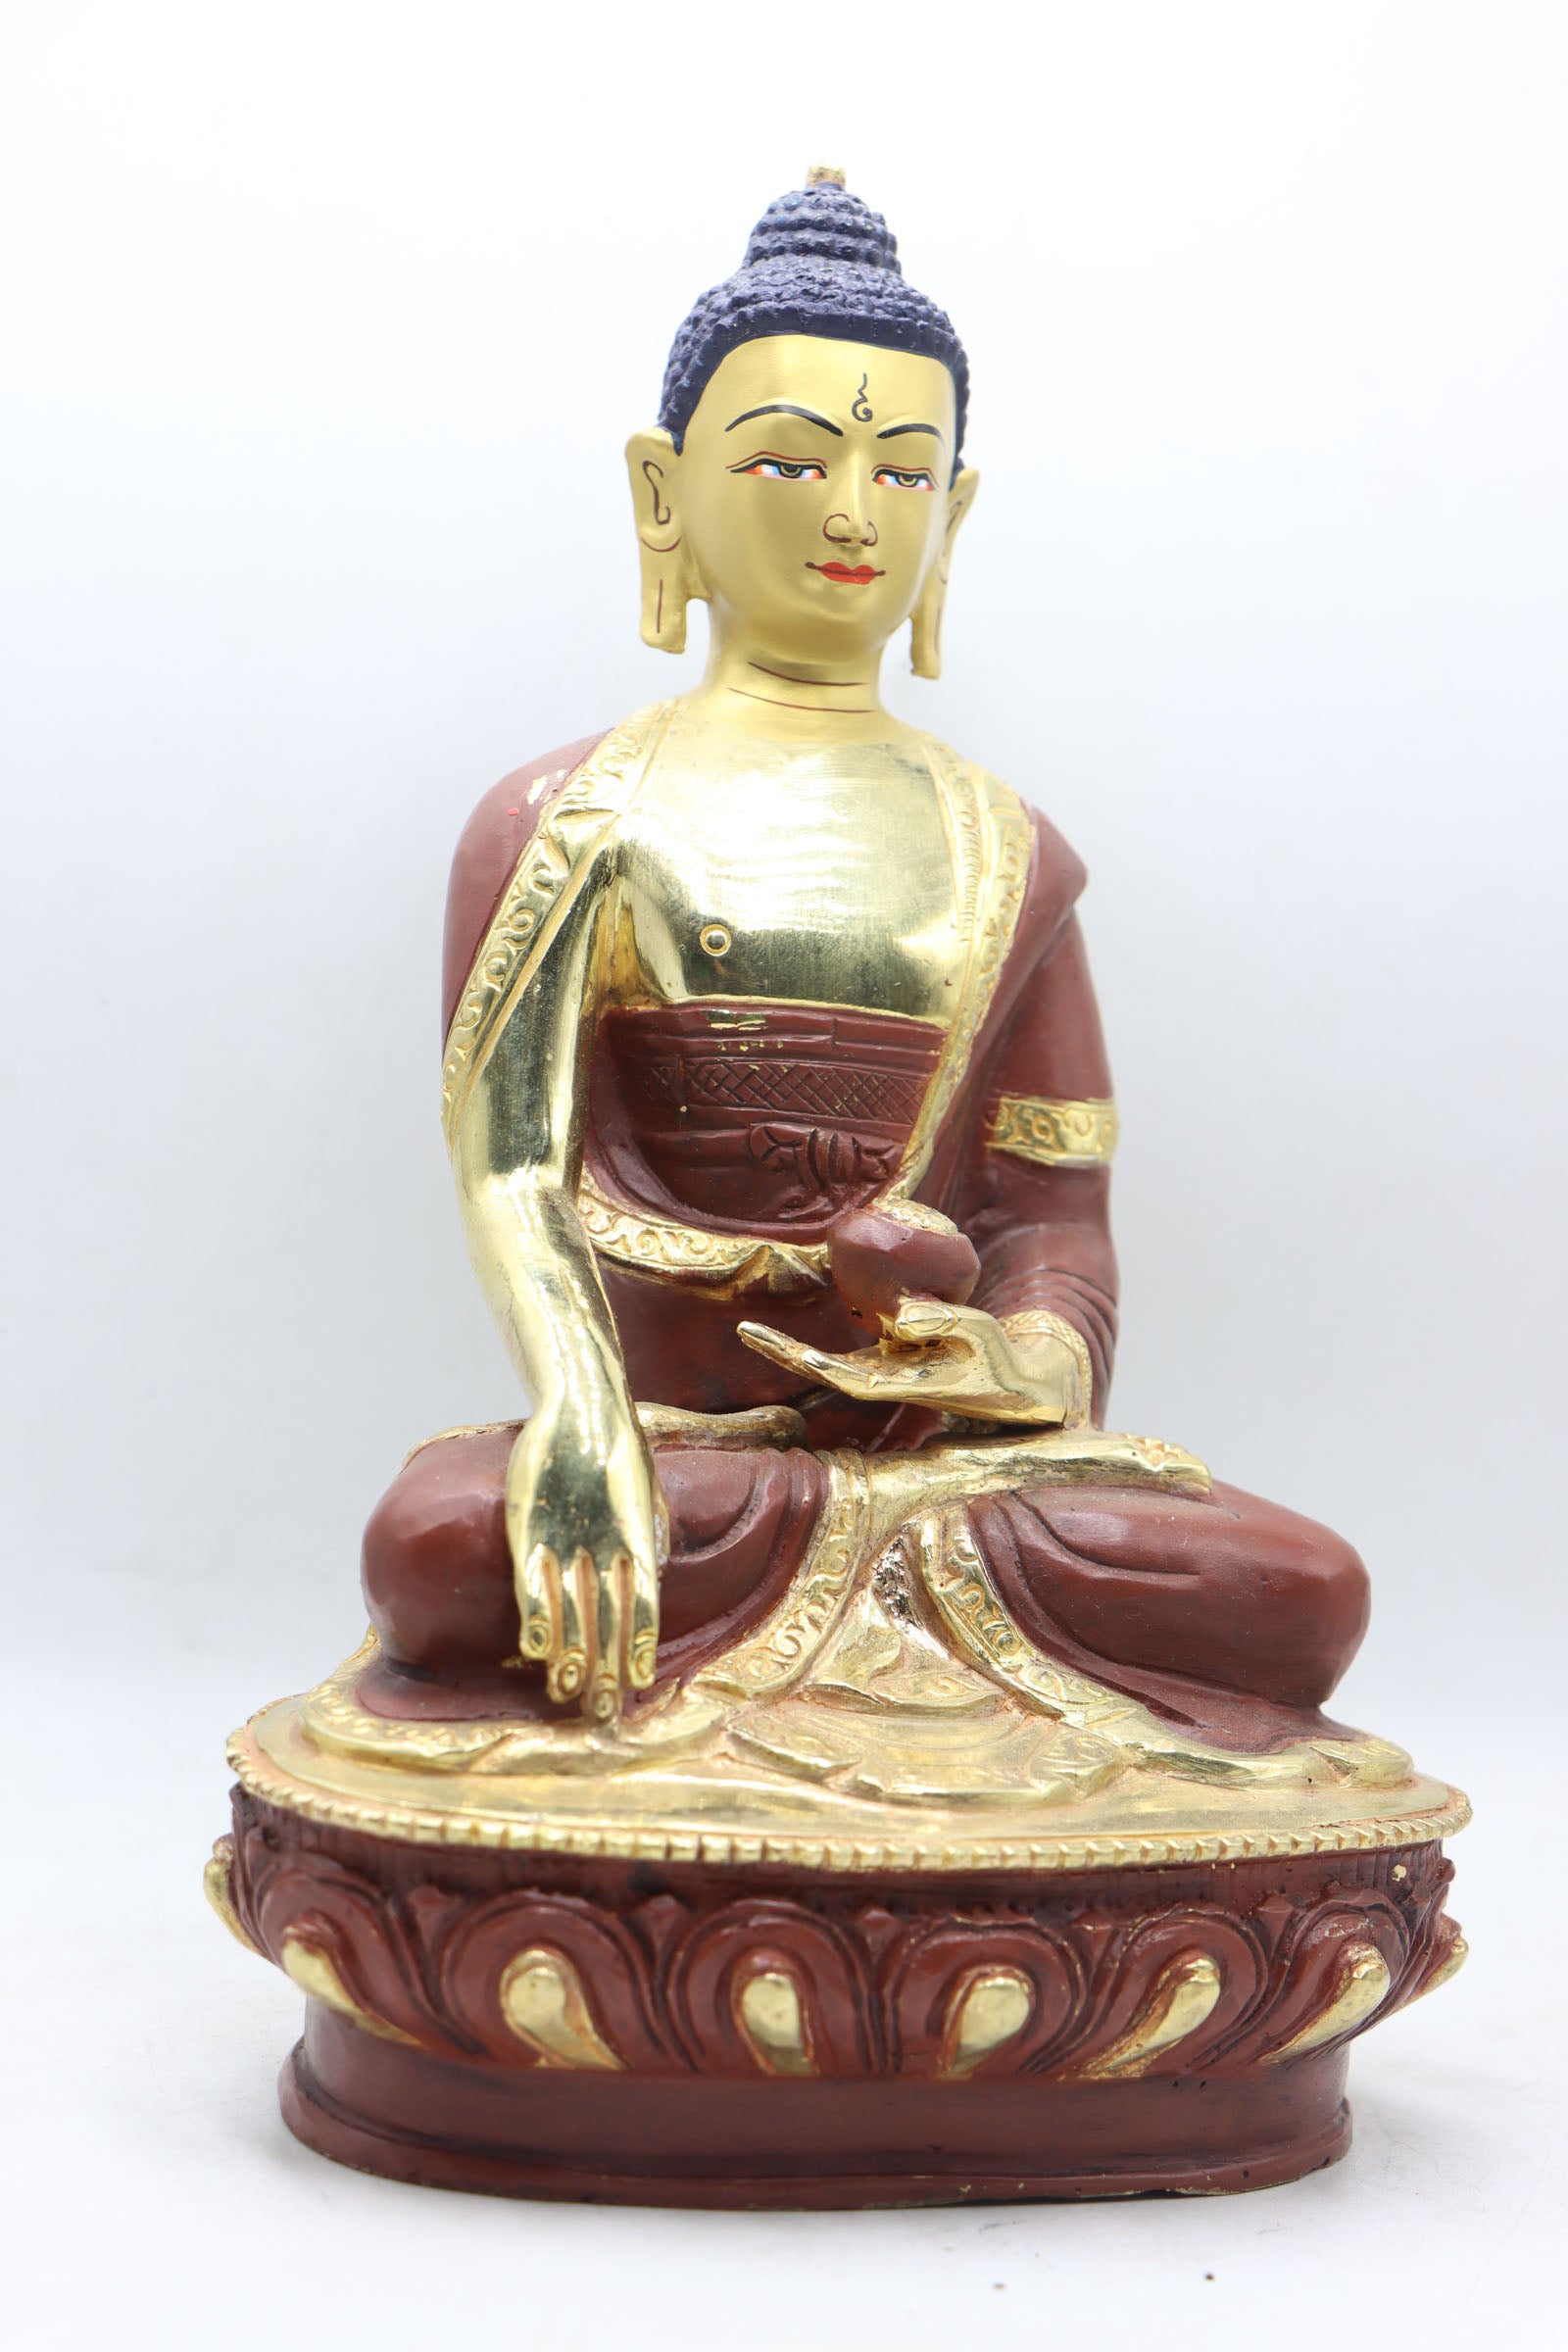 Shakyamuni Buddha statues serves as objects of reverence and inspiration.